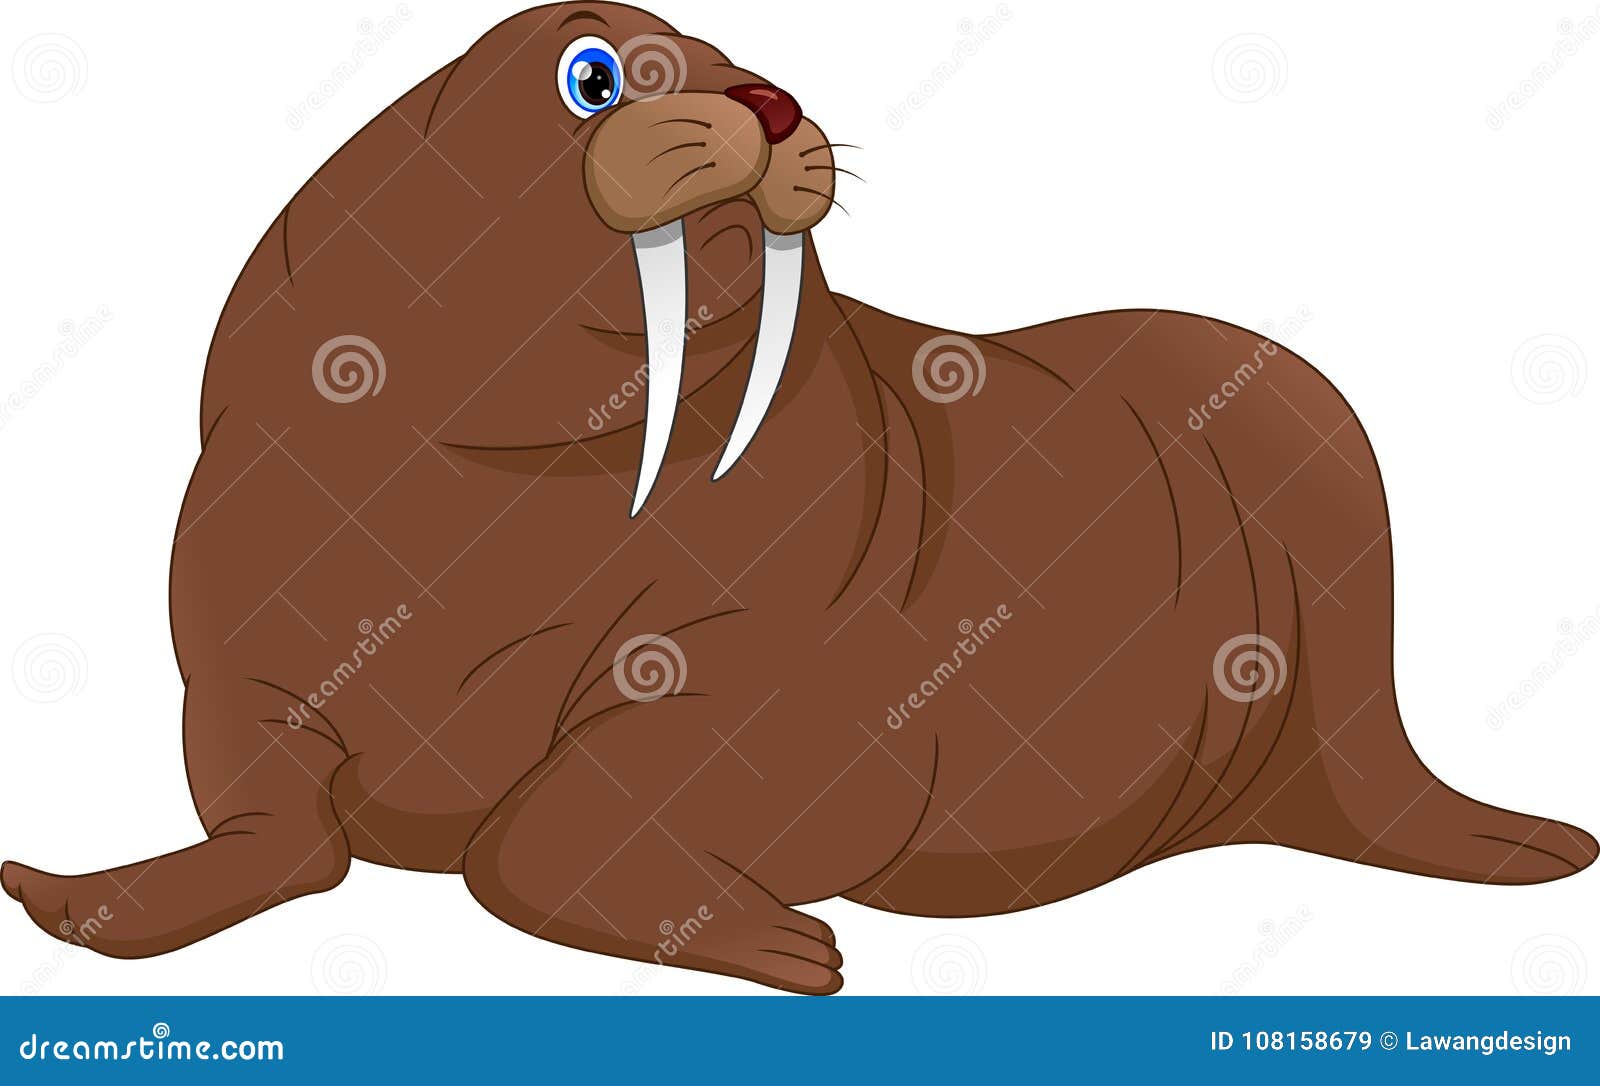 Cute walrus cartoon stock vector. Illustration of graphic - 108158679